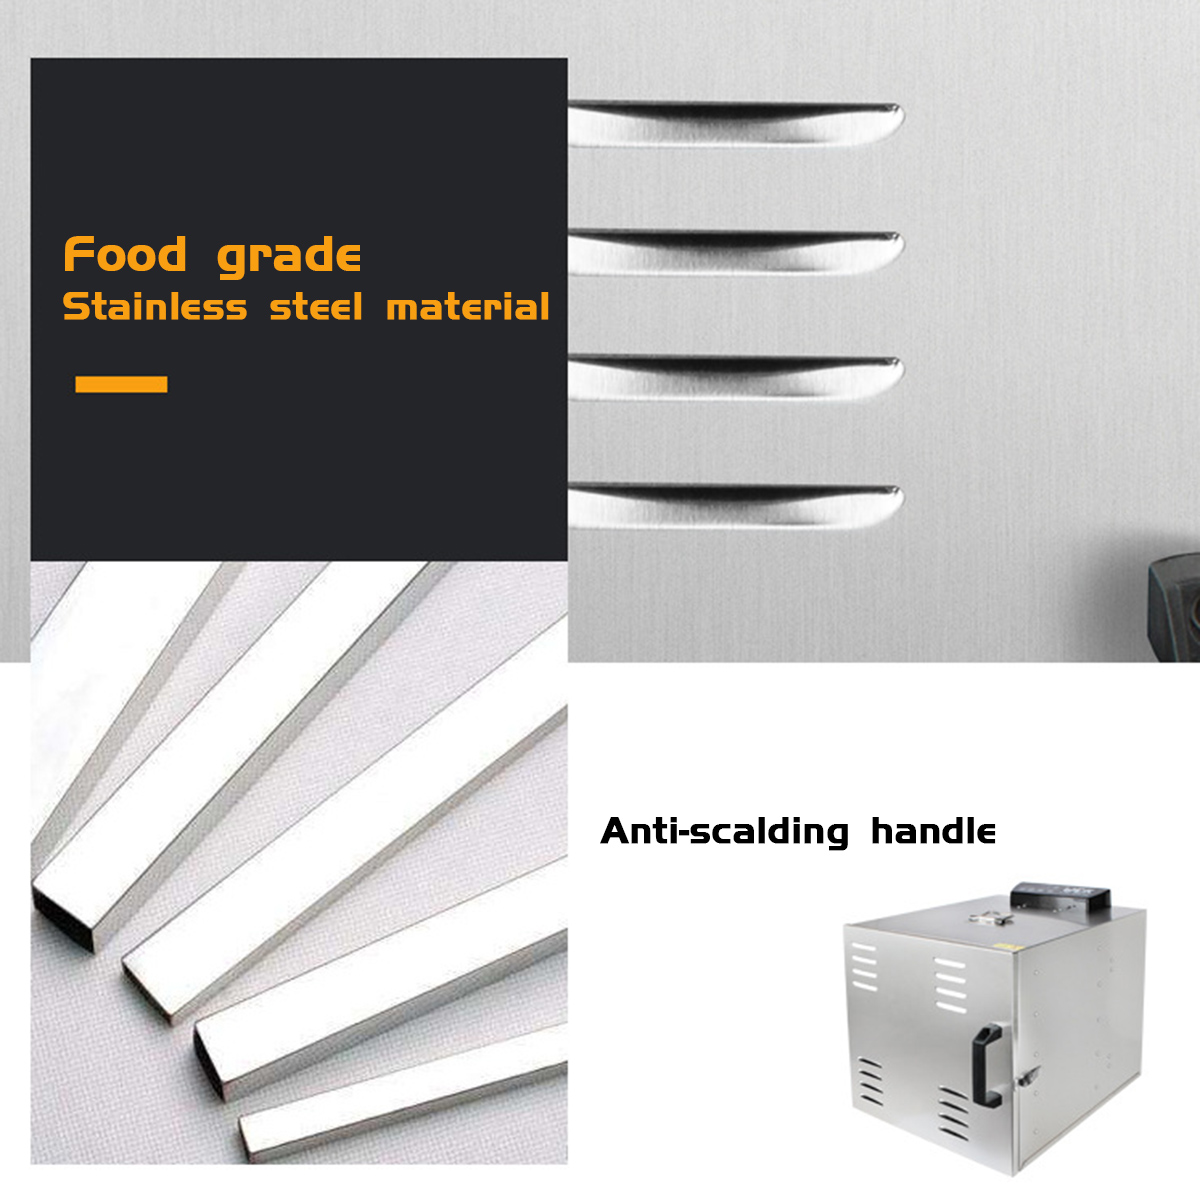 Food-Dehydrator-220V-1000W-Stainless-Steel-Yogurt-Fruit-Dryer-USEUAU-Plug-1759407-13